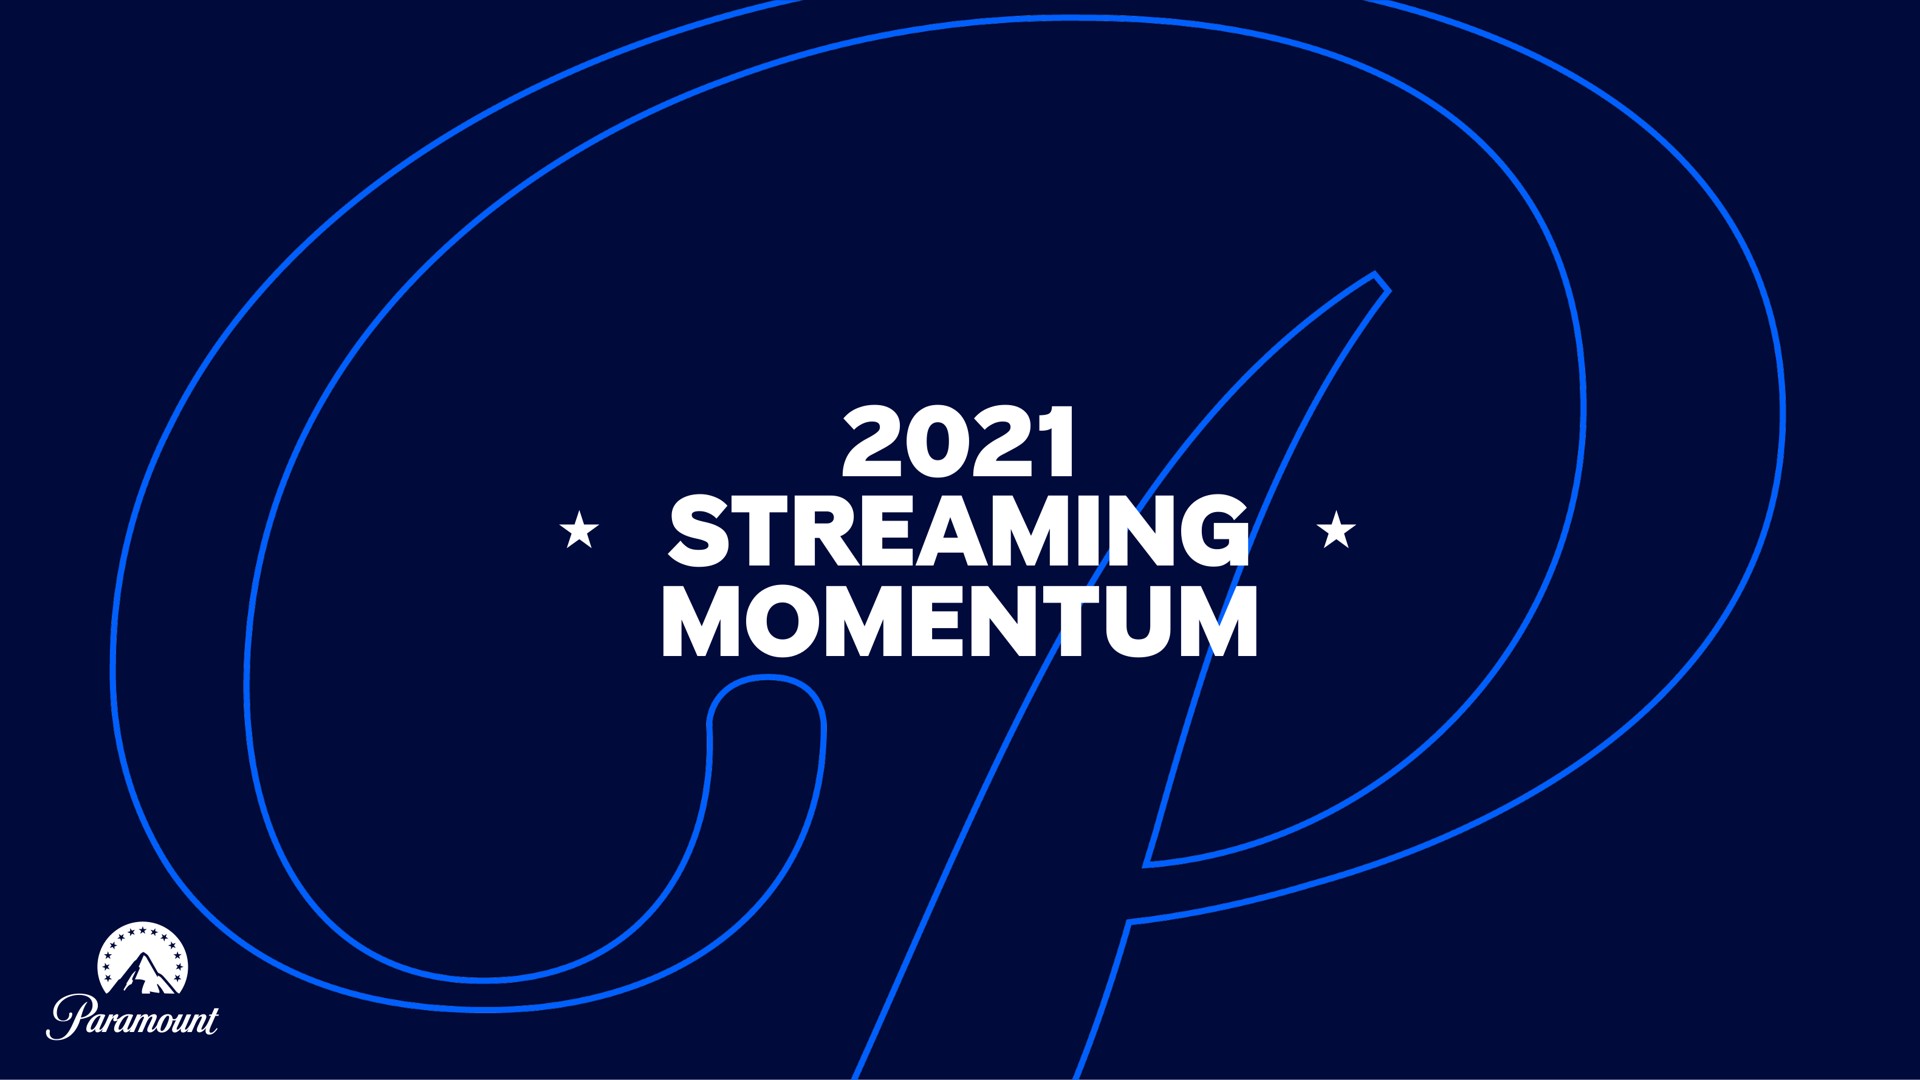 streaming momentum as | Paramount